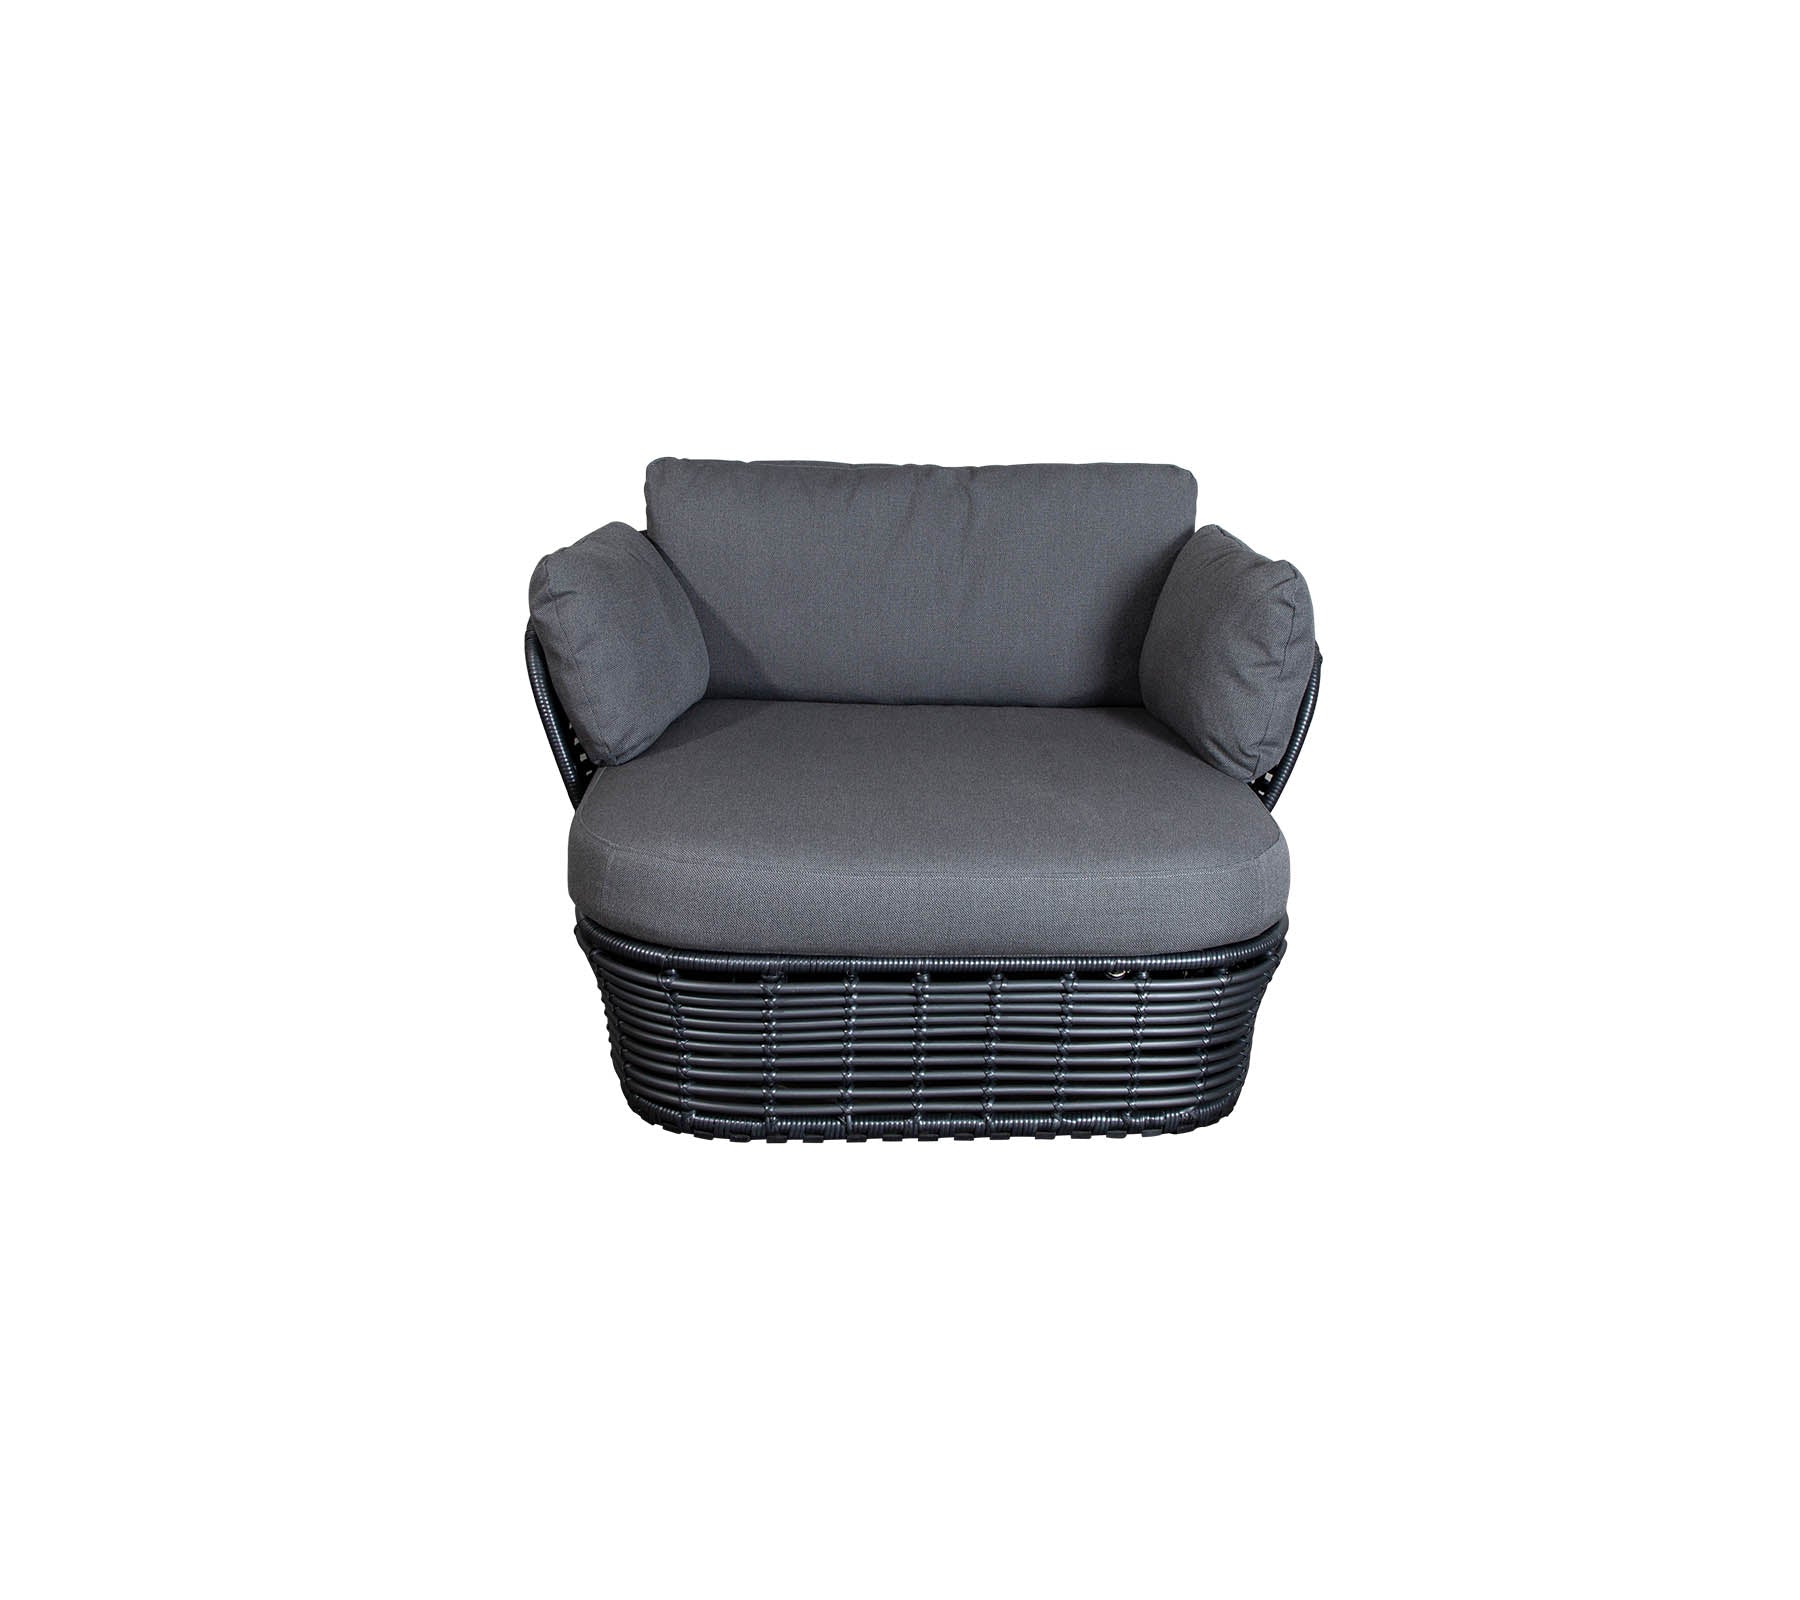 Cane-Line - Basket lounge chair, incl. AirTouch cushion set, Cane-line Weave | 54200UAITX